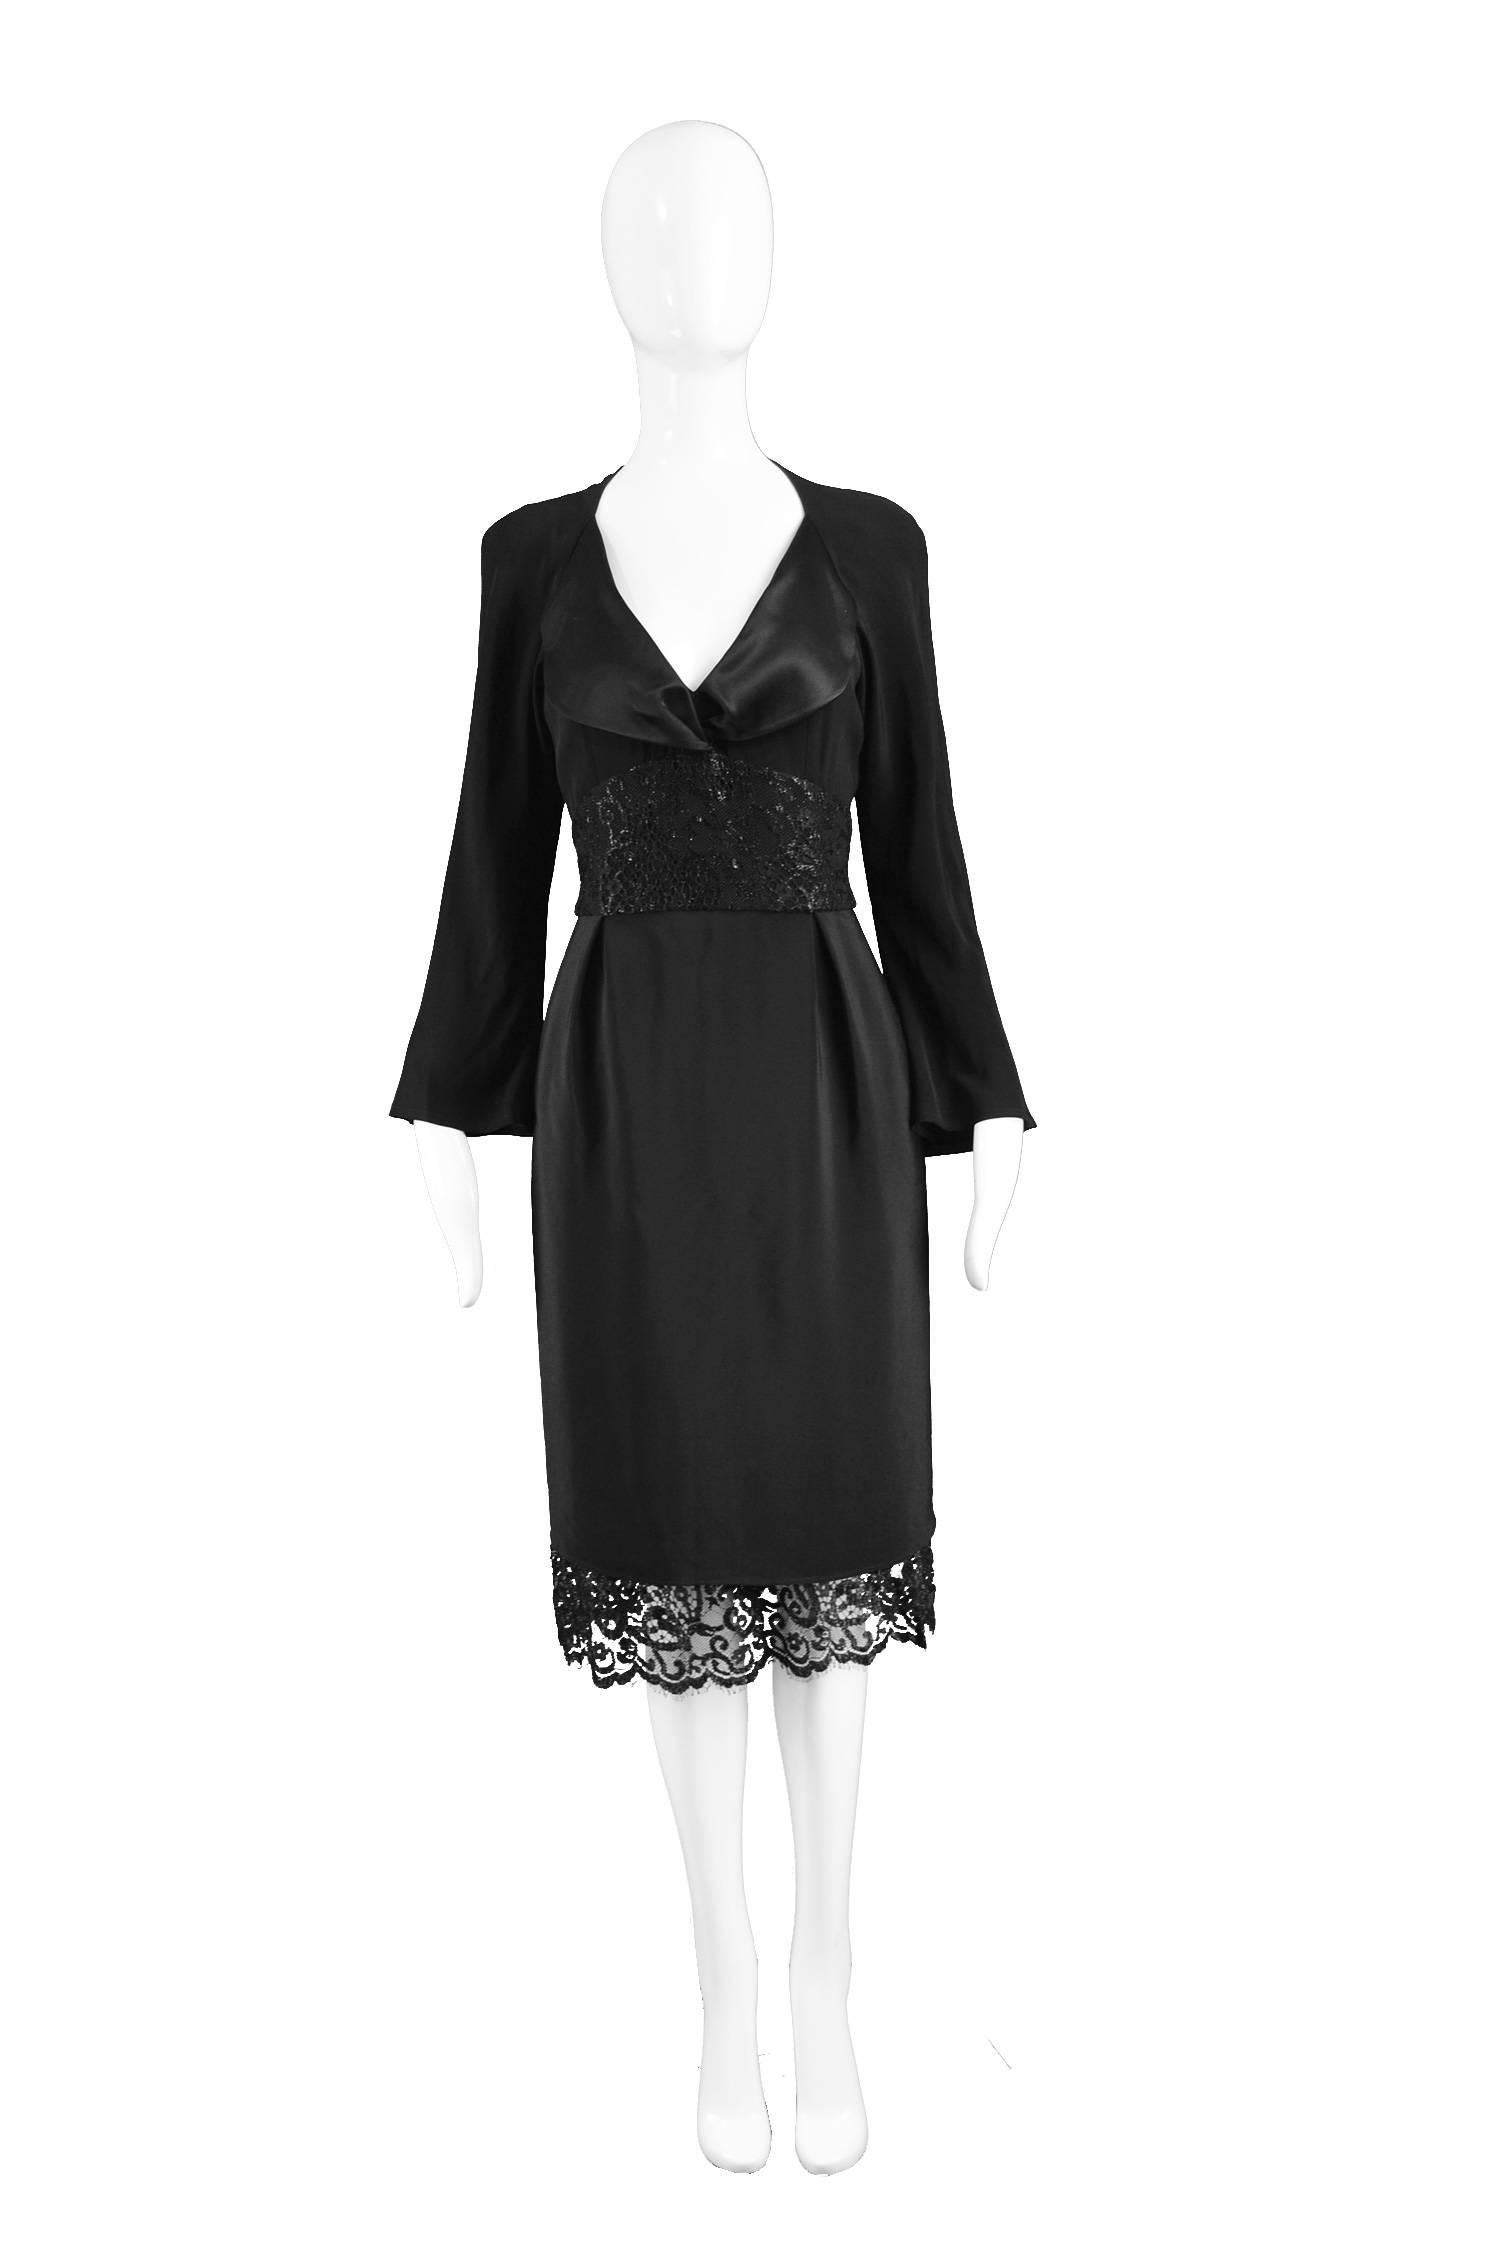 Christian Lacroix Vintage Black Lace & Satin Back Crepe Dress, 1990s

Estimated Size: UK 8/ US 4/ EU 36. Please check measurements
Bust - 32” / 81cm
Waist - 26” / 66cm
Hips - up to 38” / 96cm
Length (Shoulder to Hem) - 38” / 96cm
Length (Including